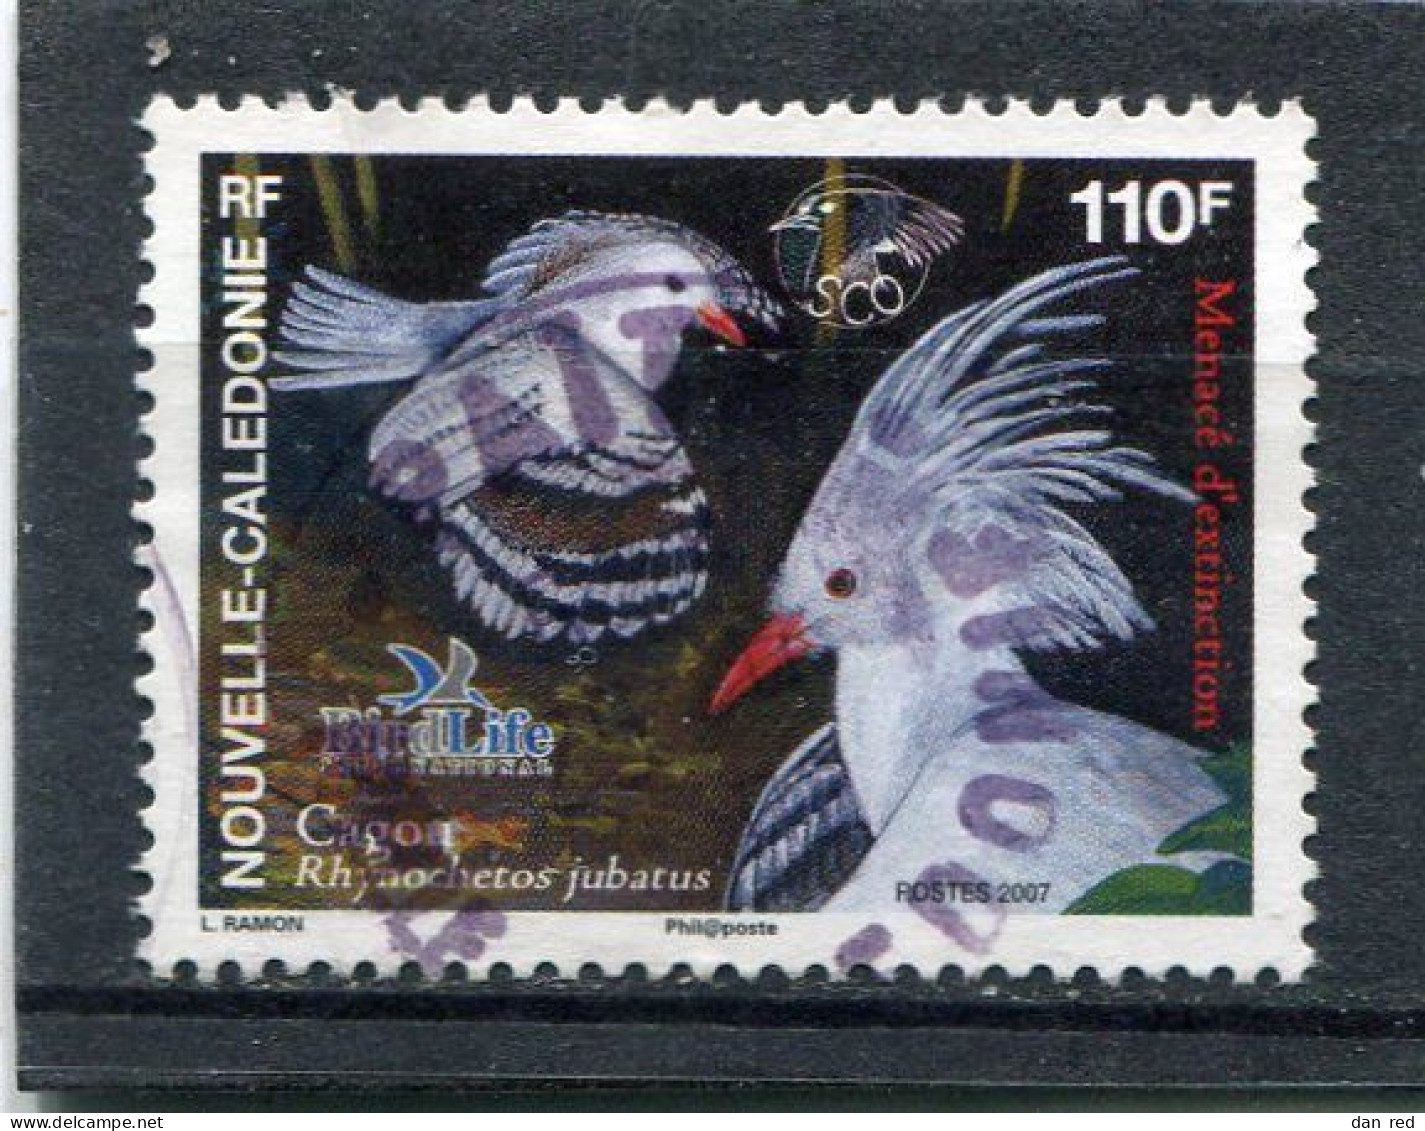 NOUVELLE CALEDONIE N° 1006 (Y&T) (Oblitéré) - Used Stamps